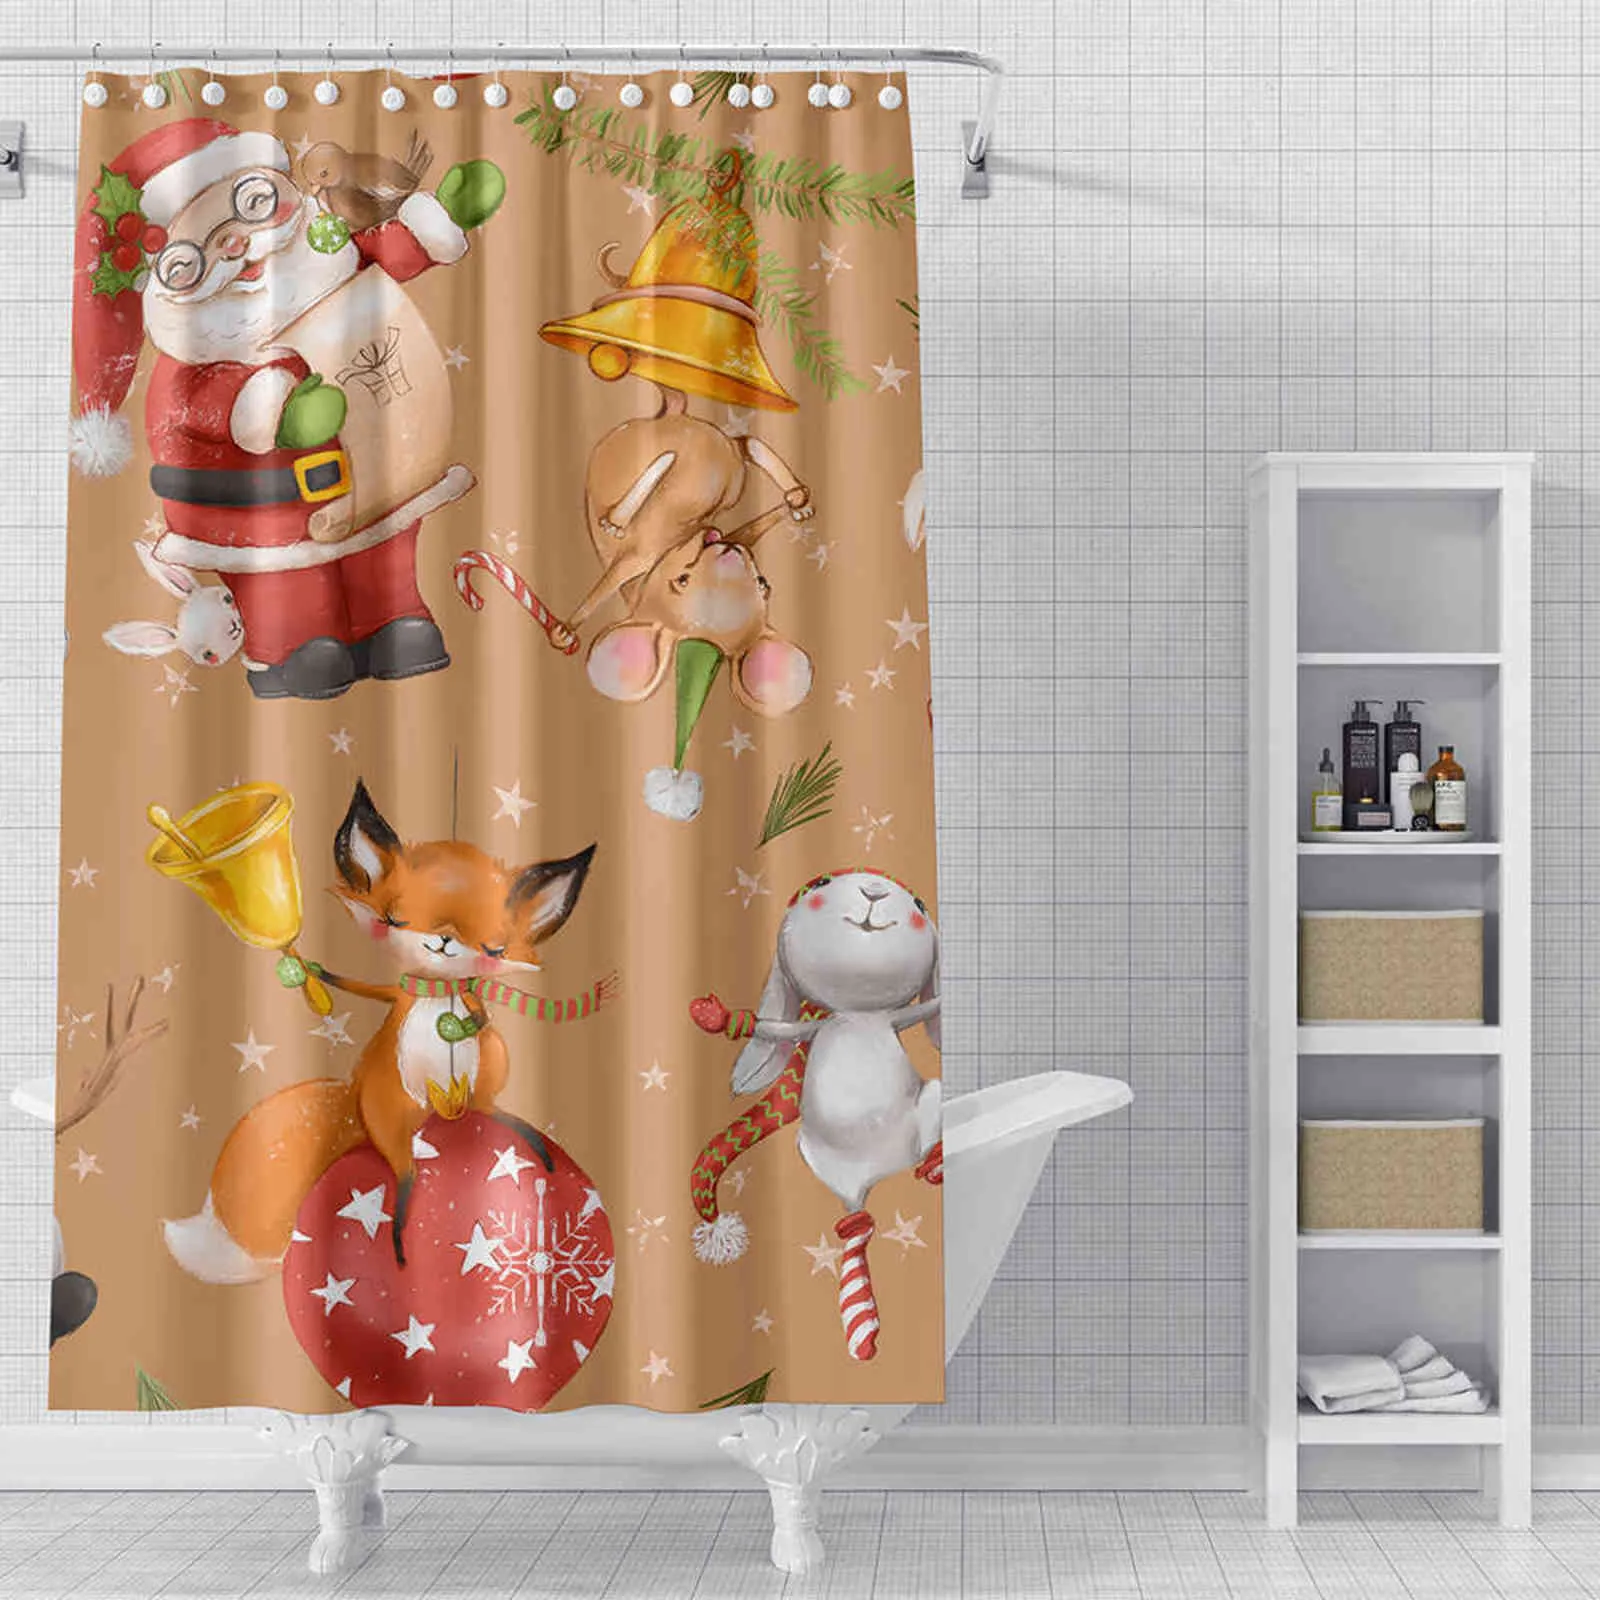 3Dプリントクリスマスシャワーカーテンバスルームカーテンフック付きバスルームカバー用浴室防水防水防水シャワーカーテン211116